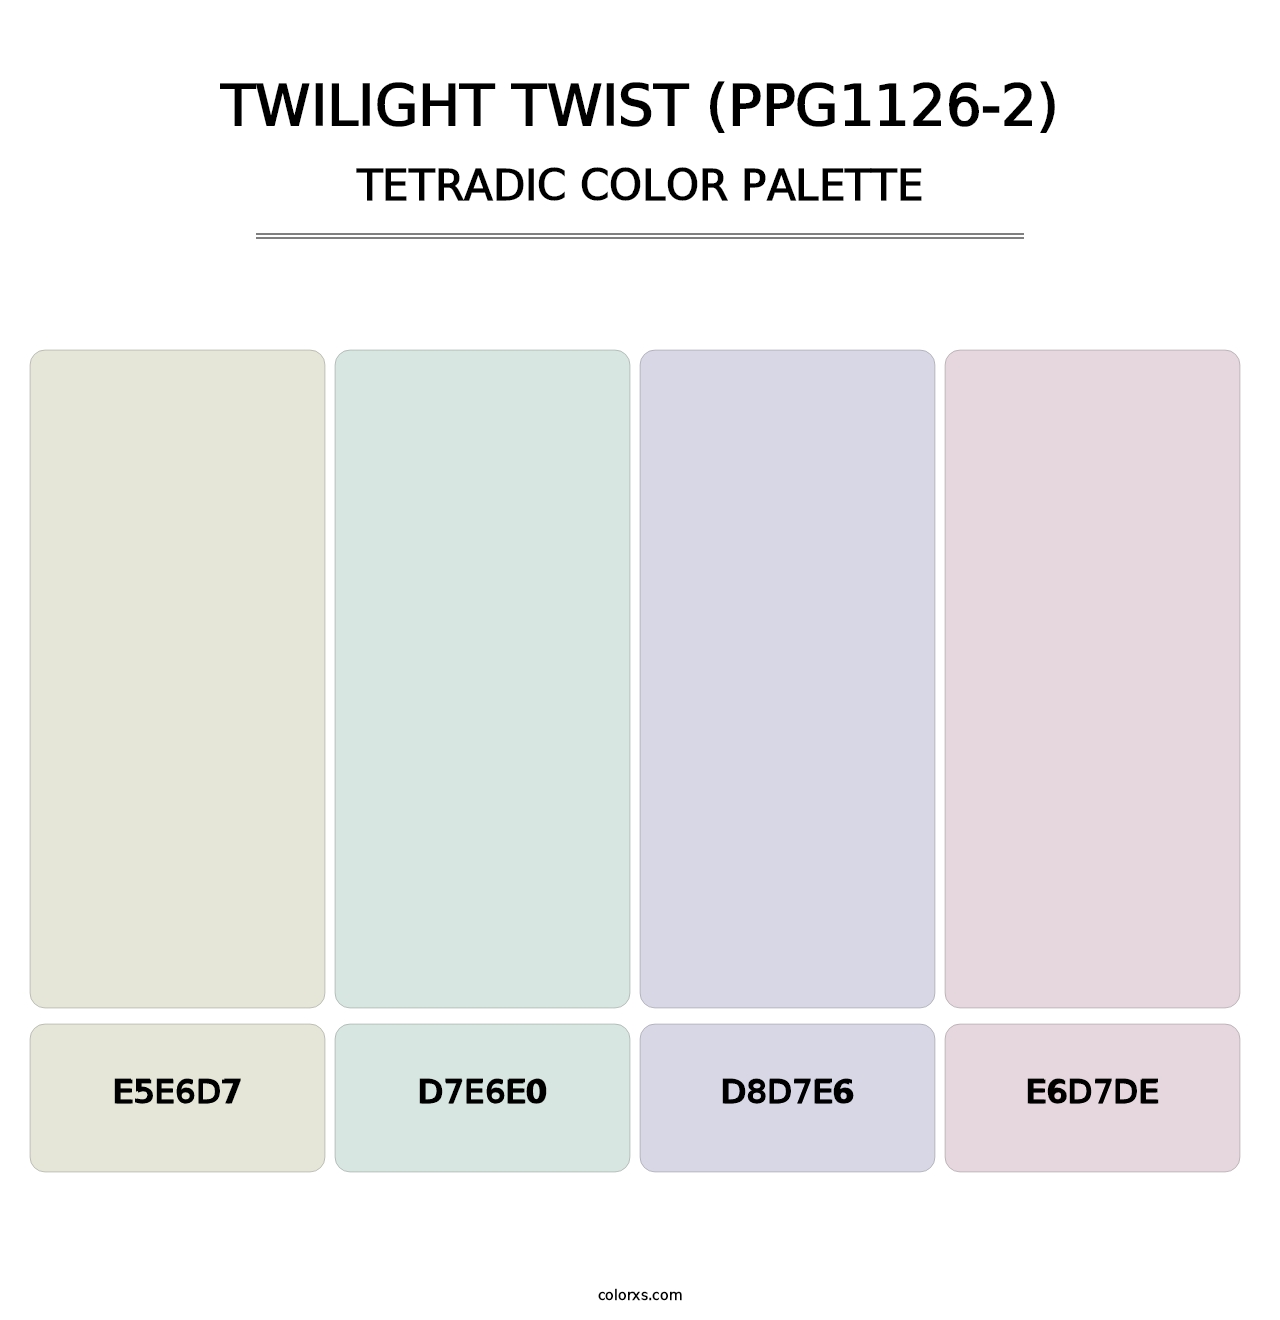 Twilight Twist (PPG1126-2) - Tetradic Color Palette